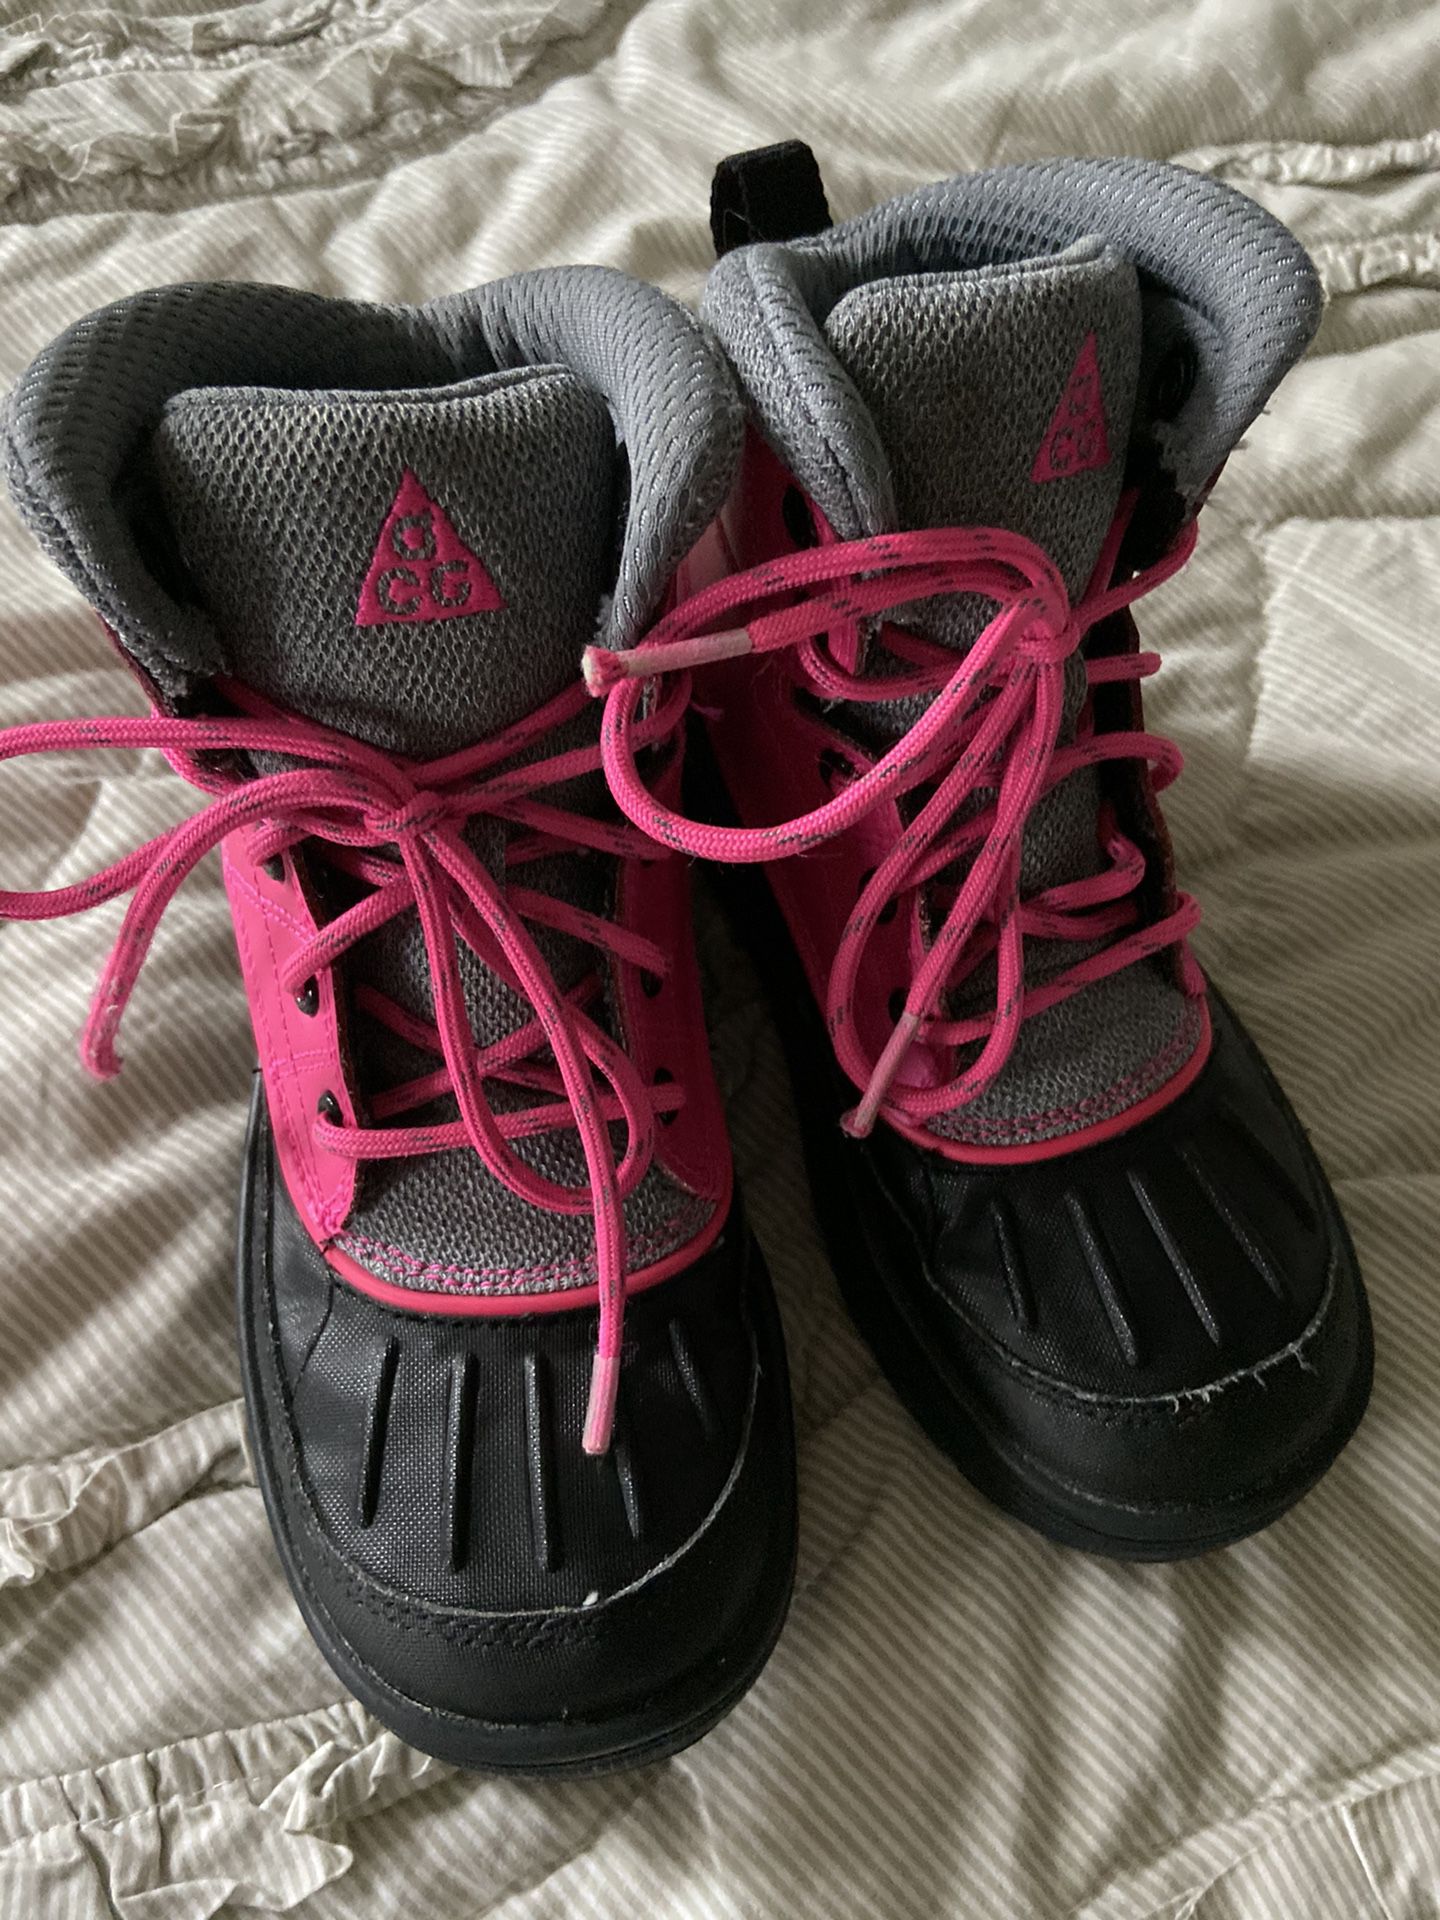 Nike 13 ACG snow rain boots girls